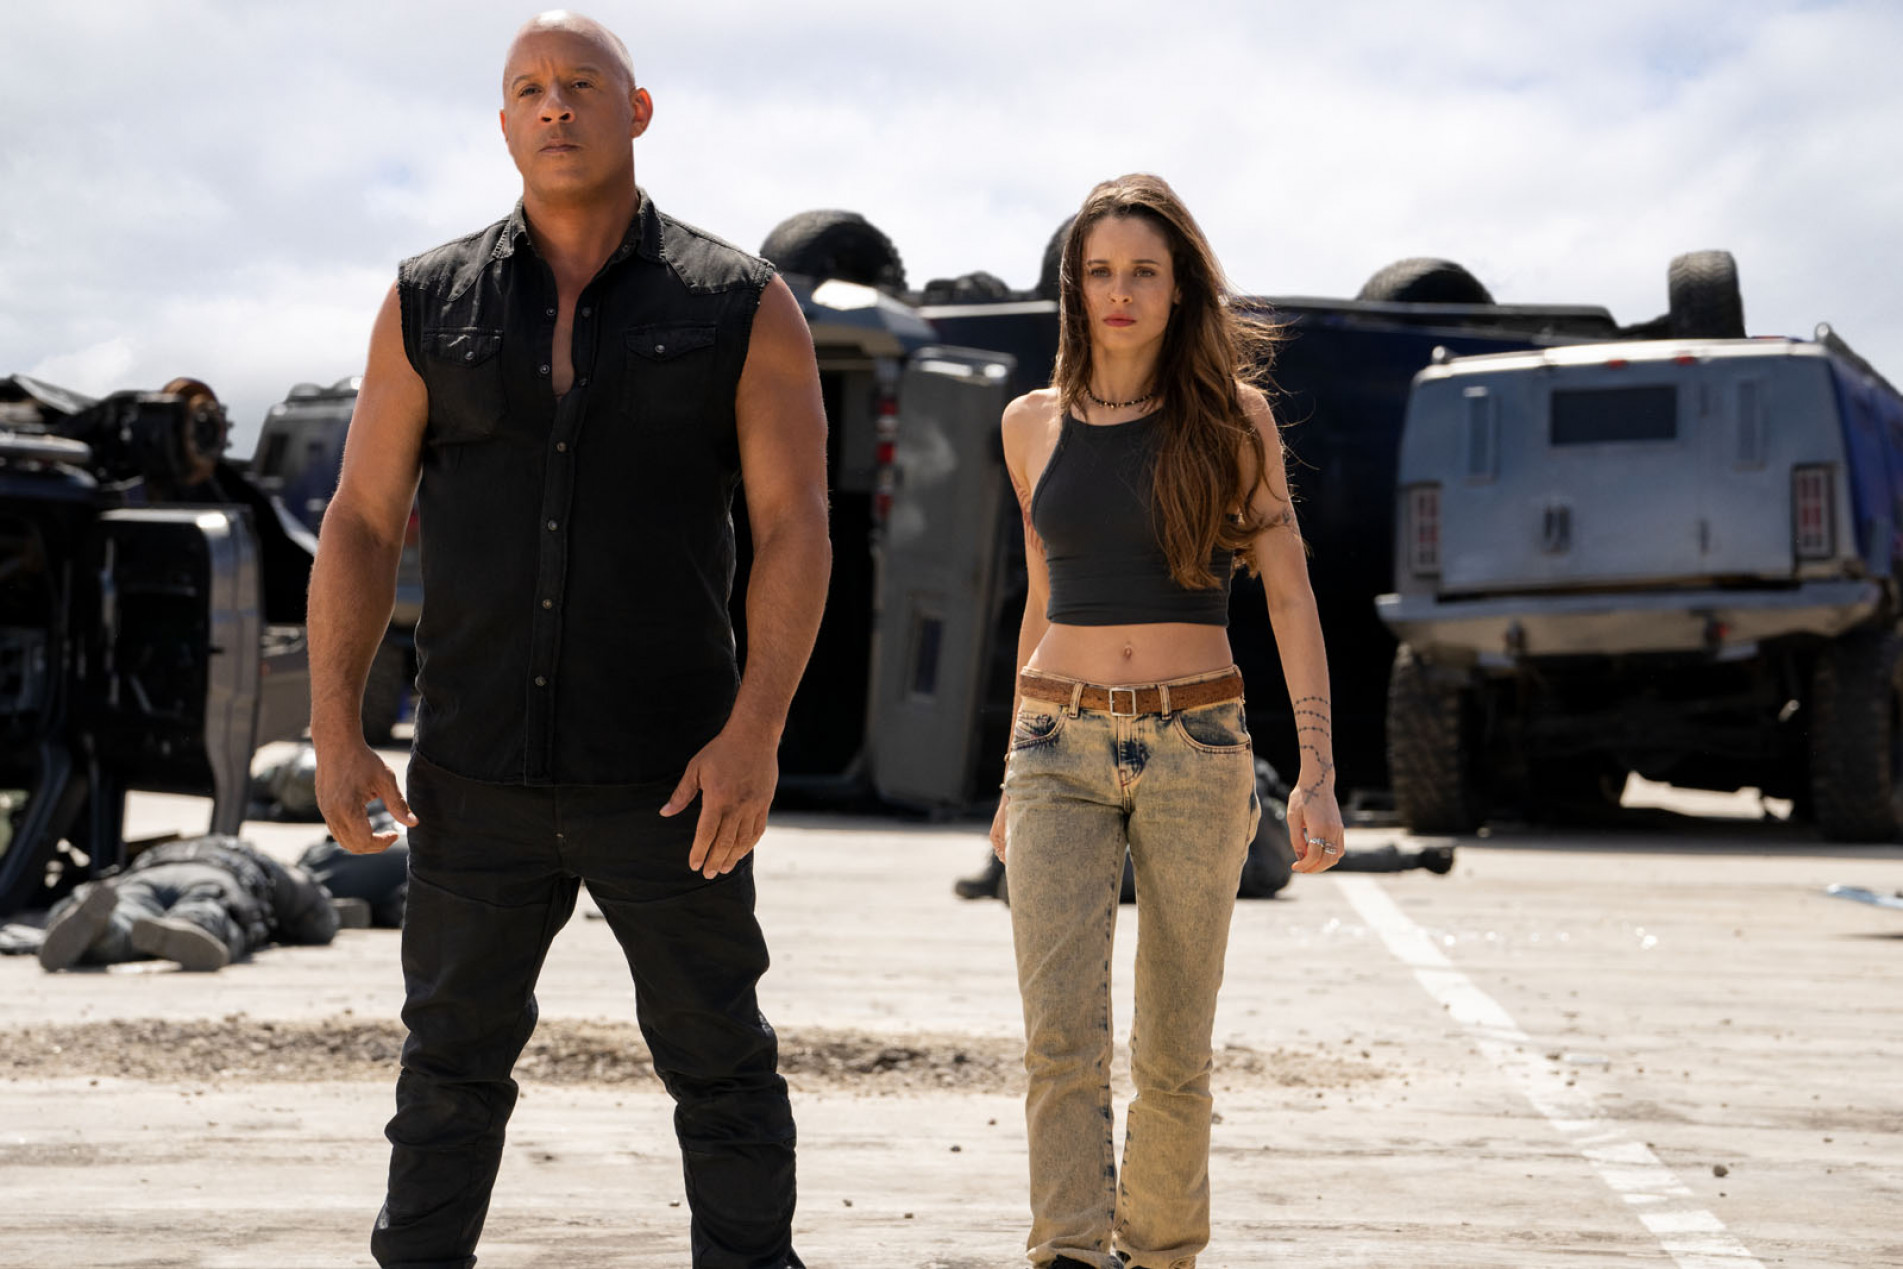 Os 10 melhores filmes de Vin Diesel, classificados pelo Rotten Tomatoes